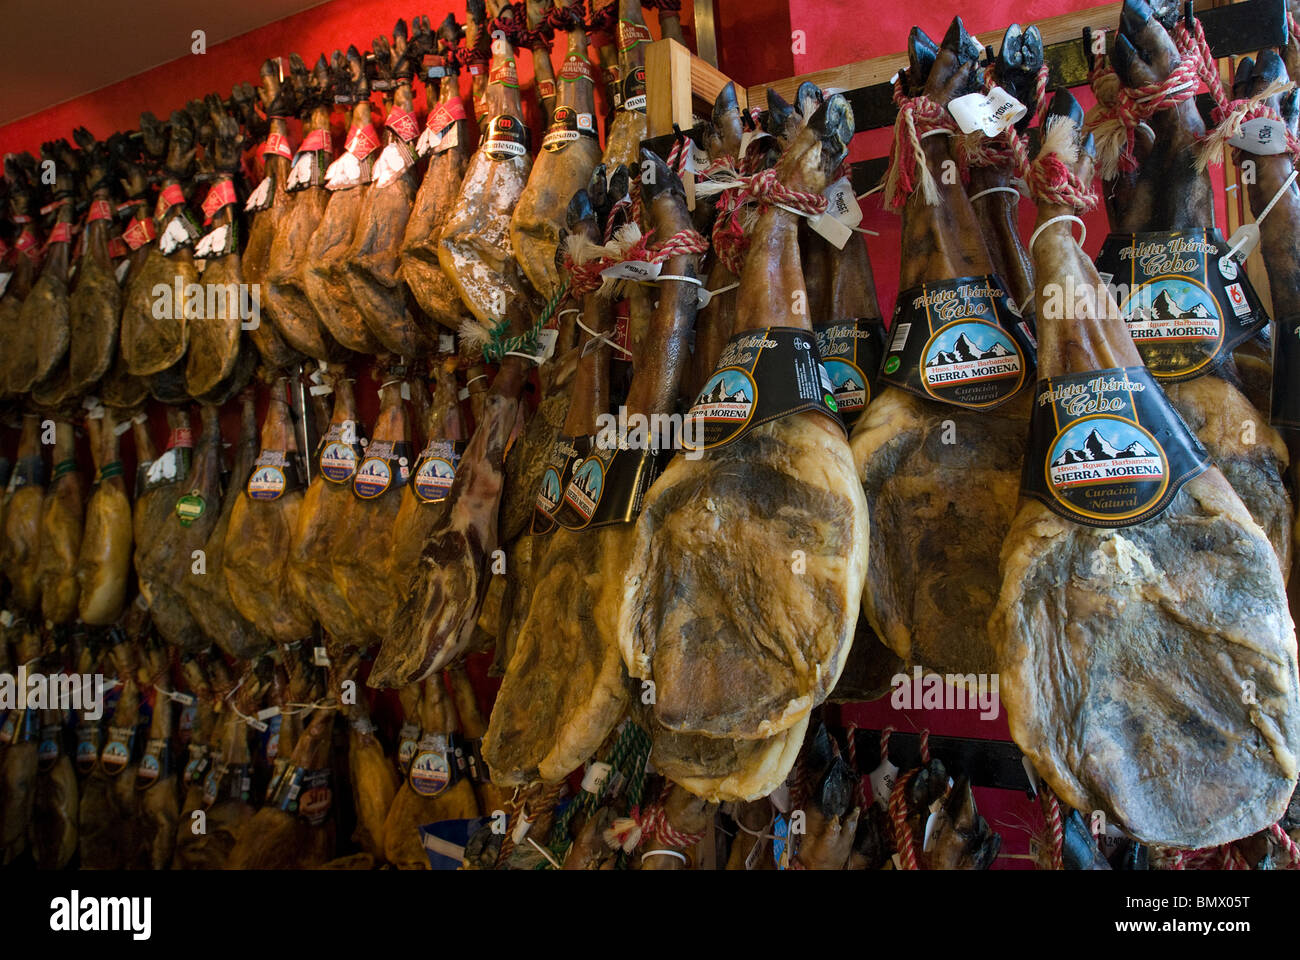 Cured Ham Jamon legs on display for sale, Mahon, Menorca, Balearics, Spain Stock Photo